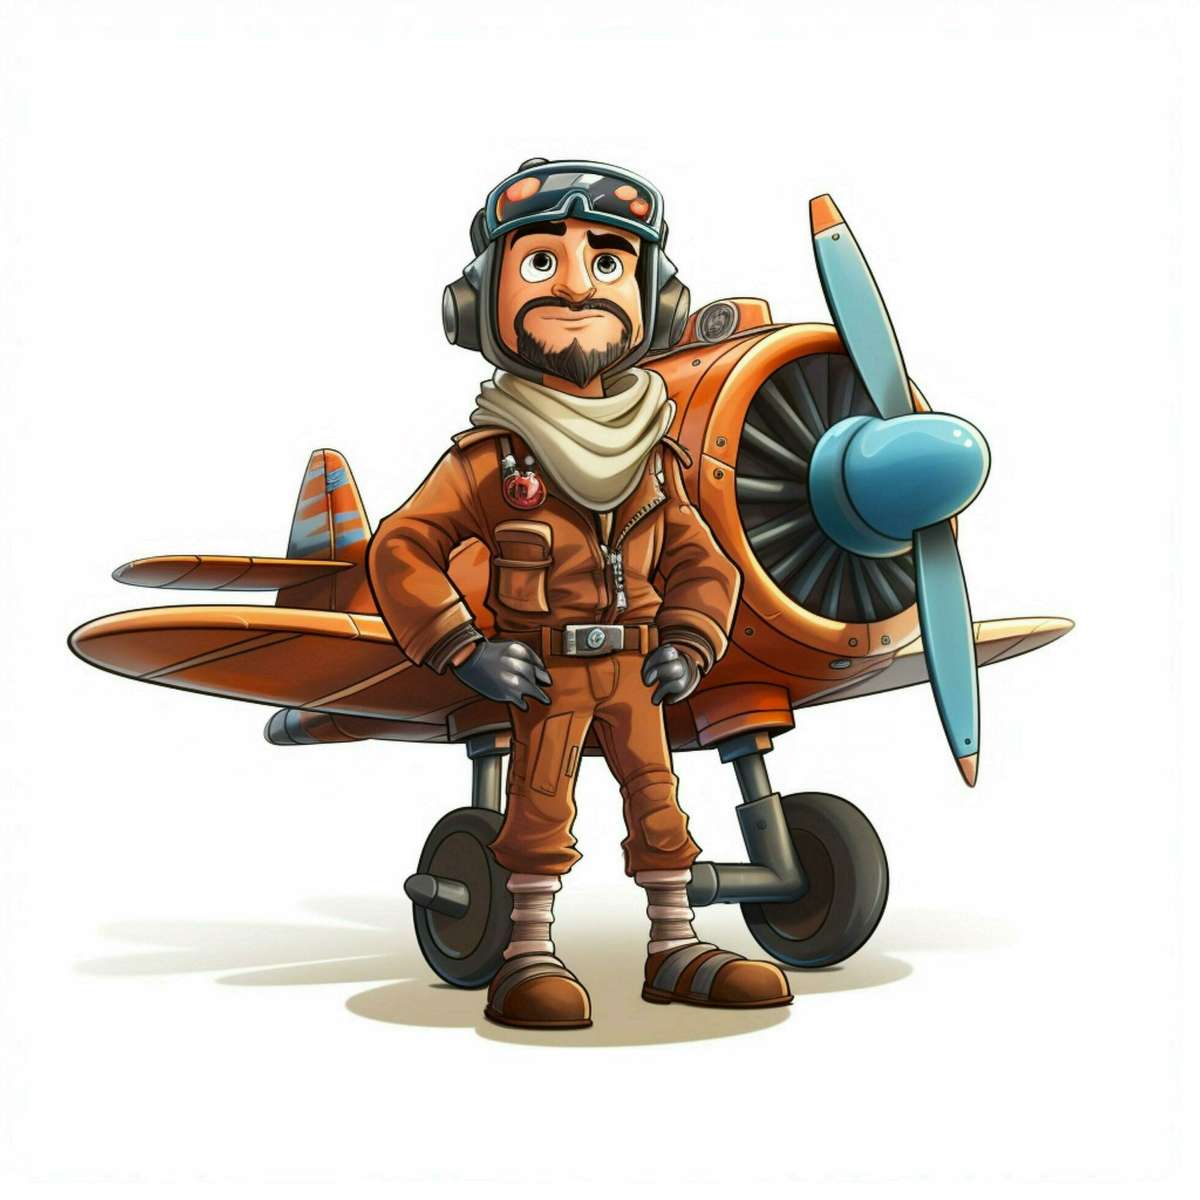 Piloto/Aviador puzzle online a partir de fotografia